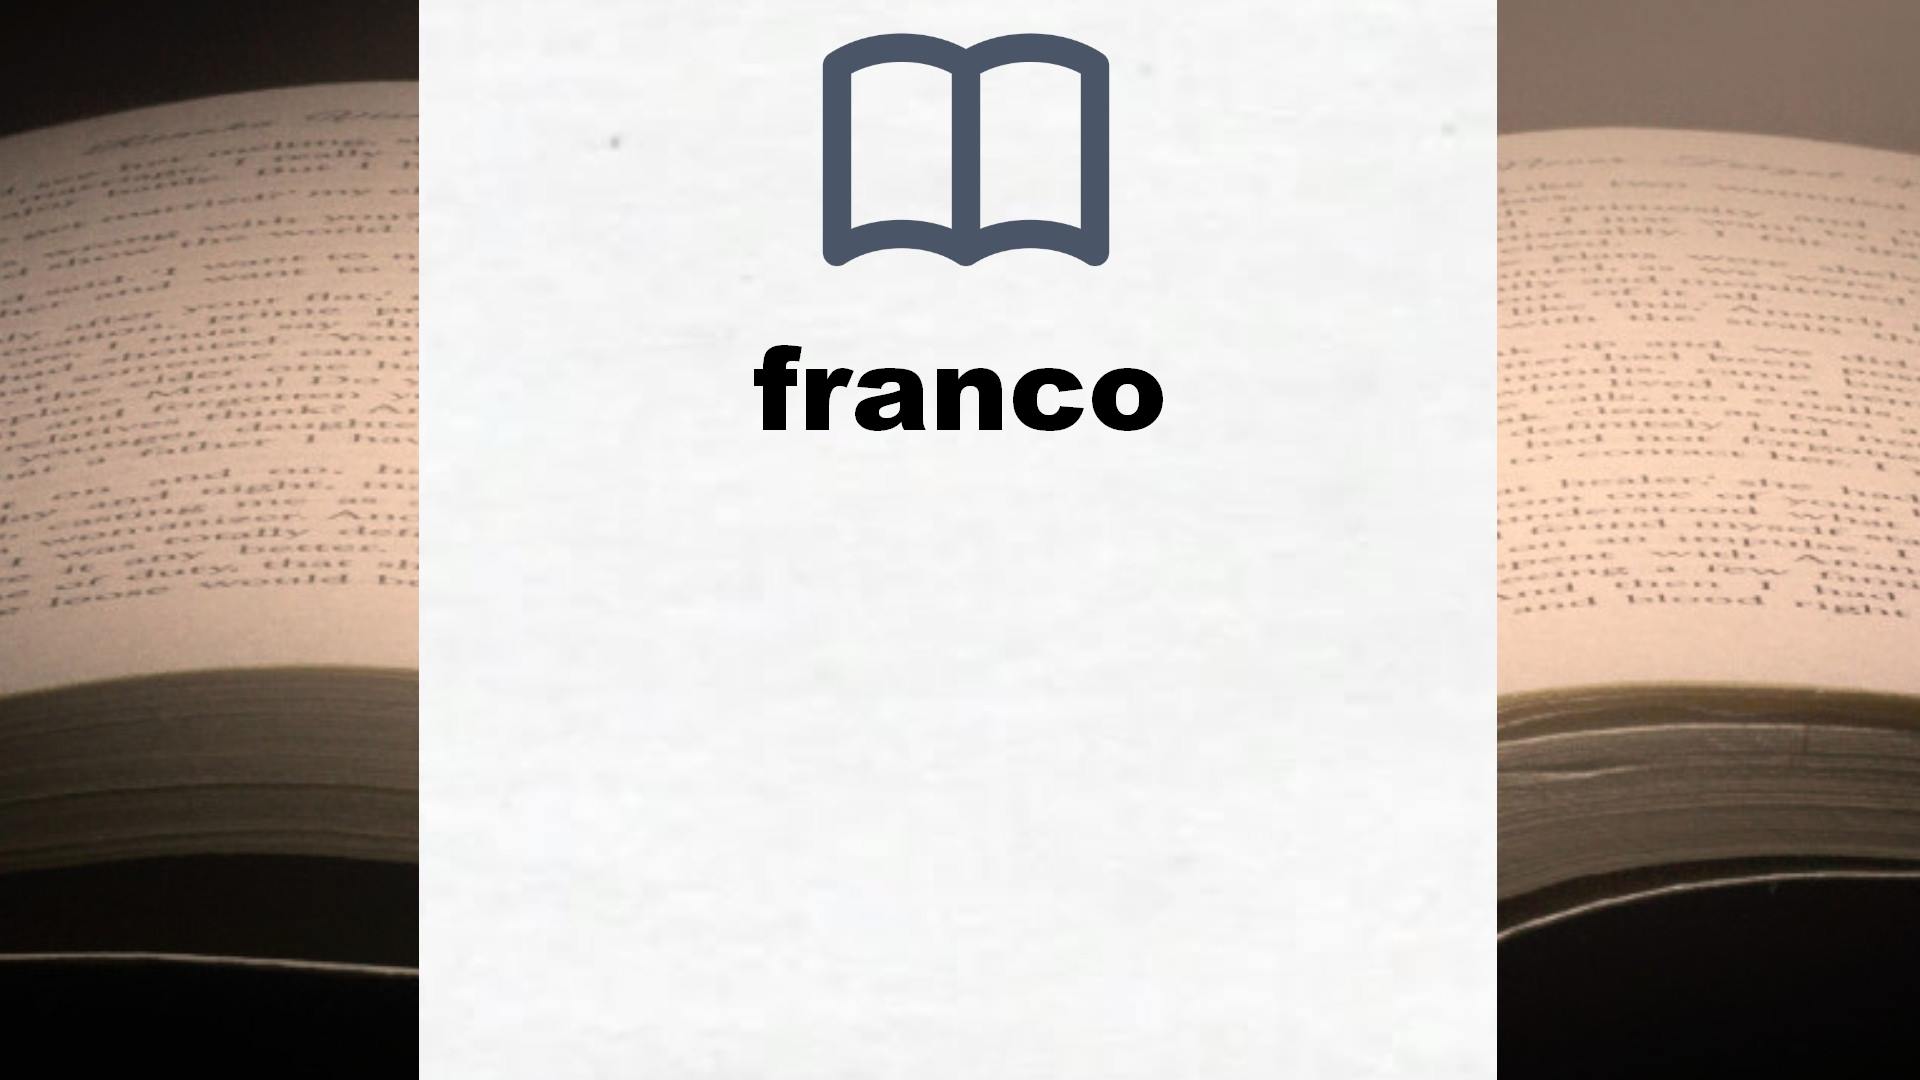 Libros sobre franco